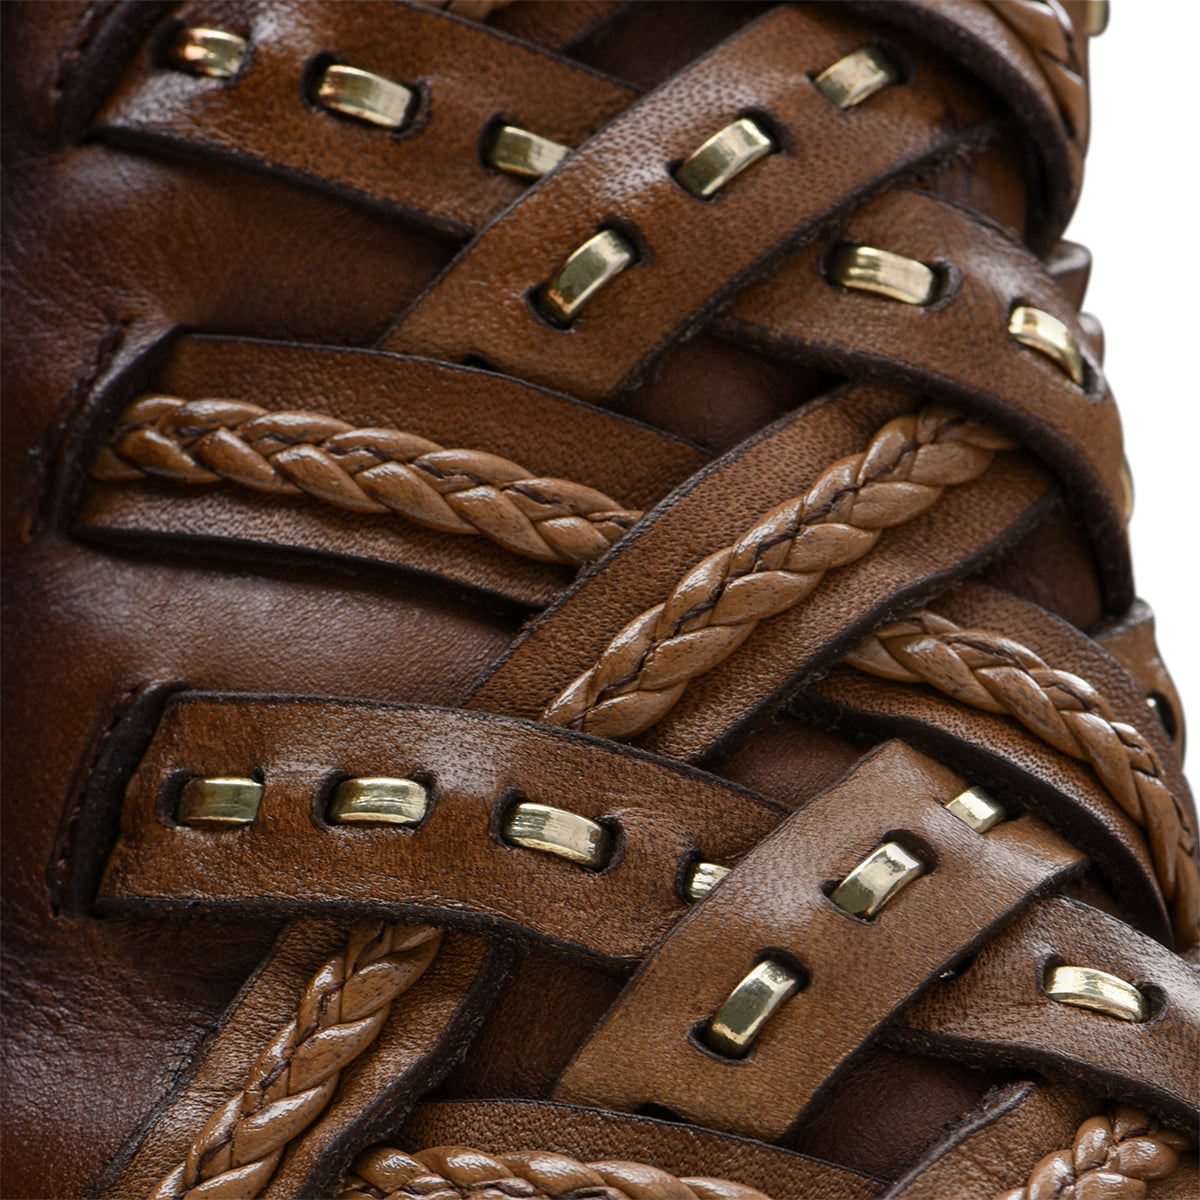 Cuadra Women's Brown Woven Leather Bootie